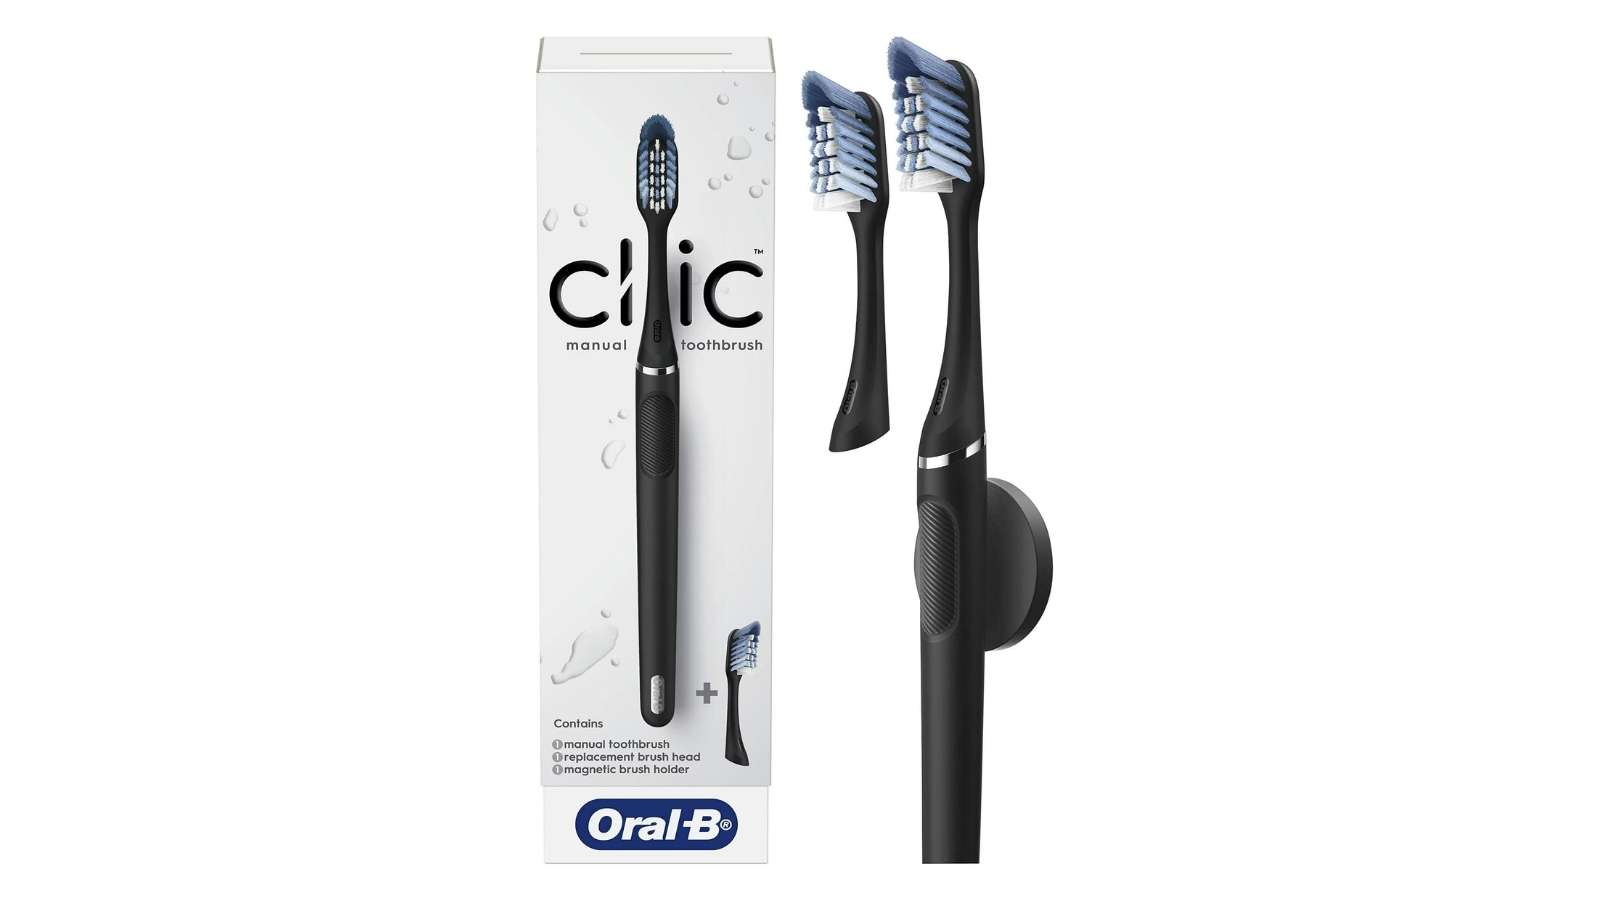 display of oral-b clic manual toothbrush